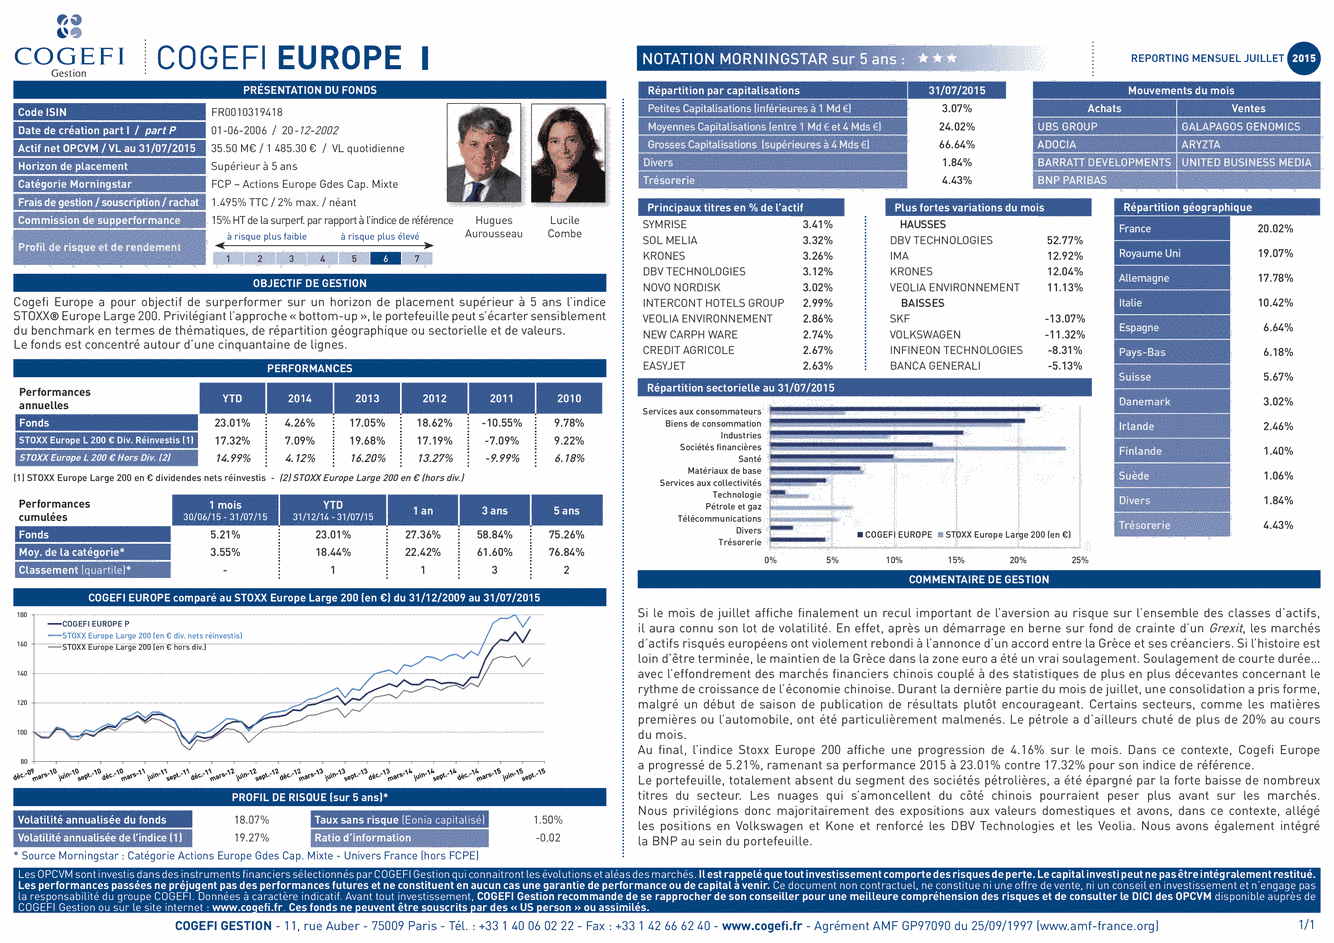 Fiche Produit Cogefi Europe I - 31/07/2015 - Français